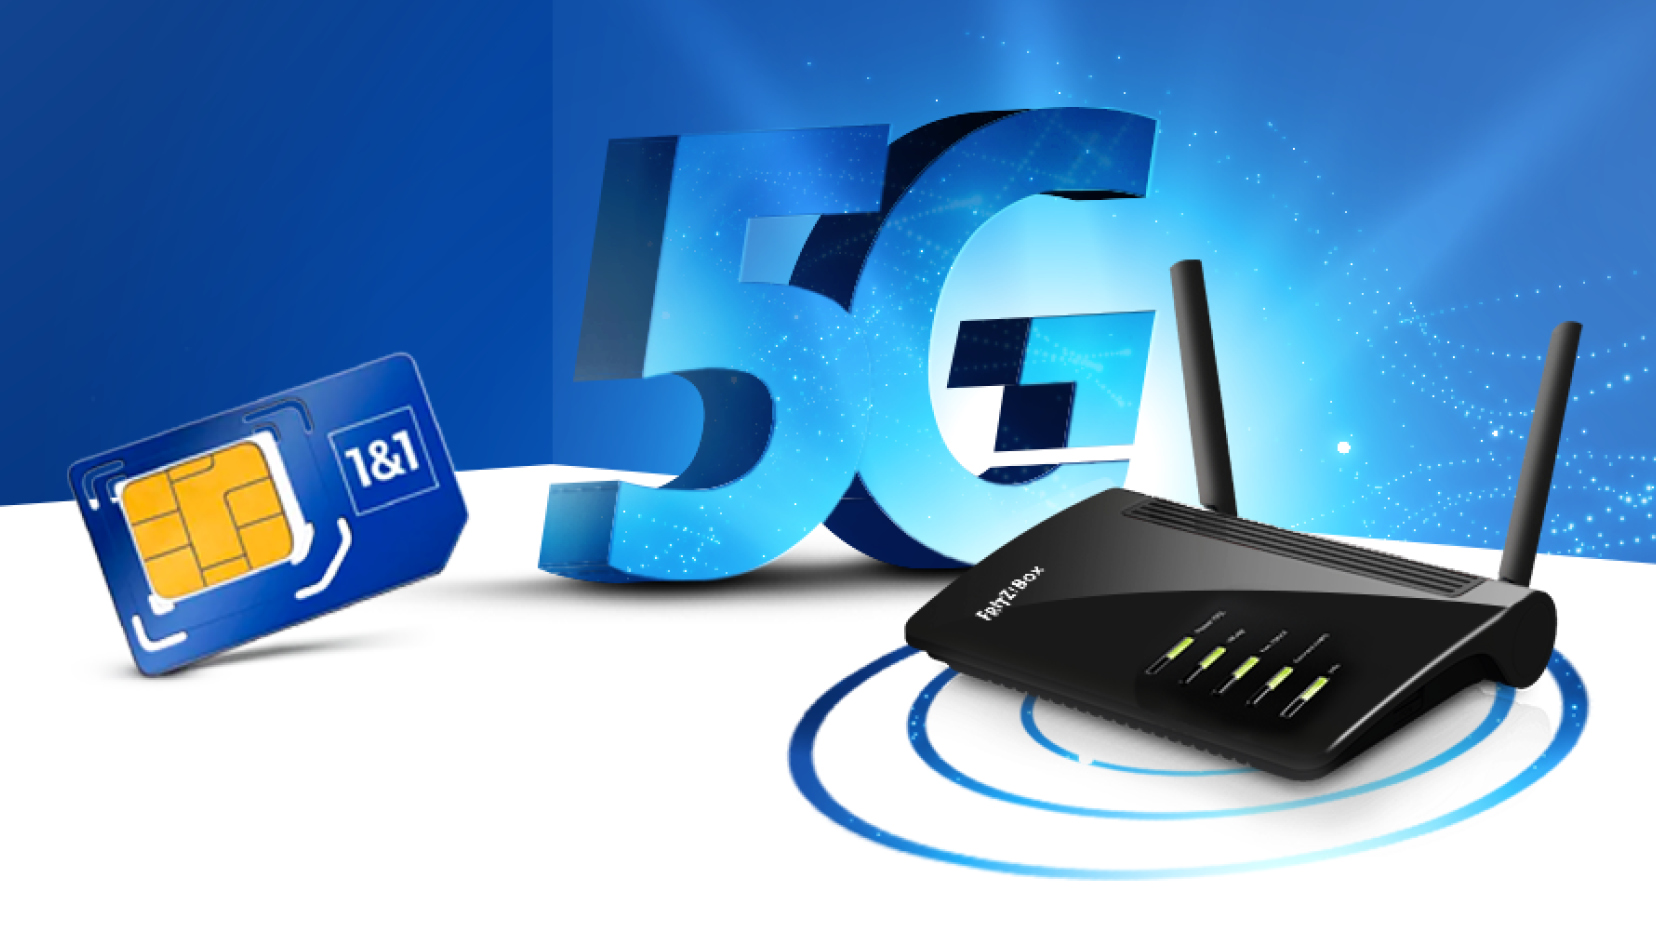 1&1 5G Netzausbau: Neue 1&1 Mobilfunktarife ab dem 8.Dezember